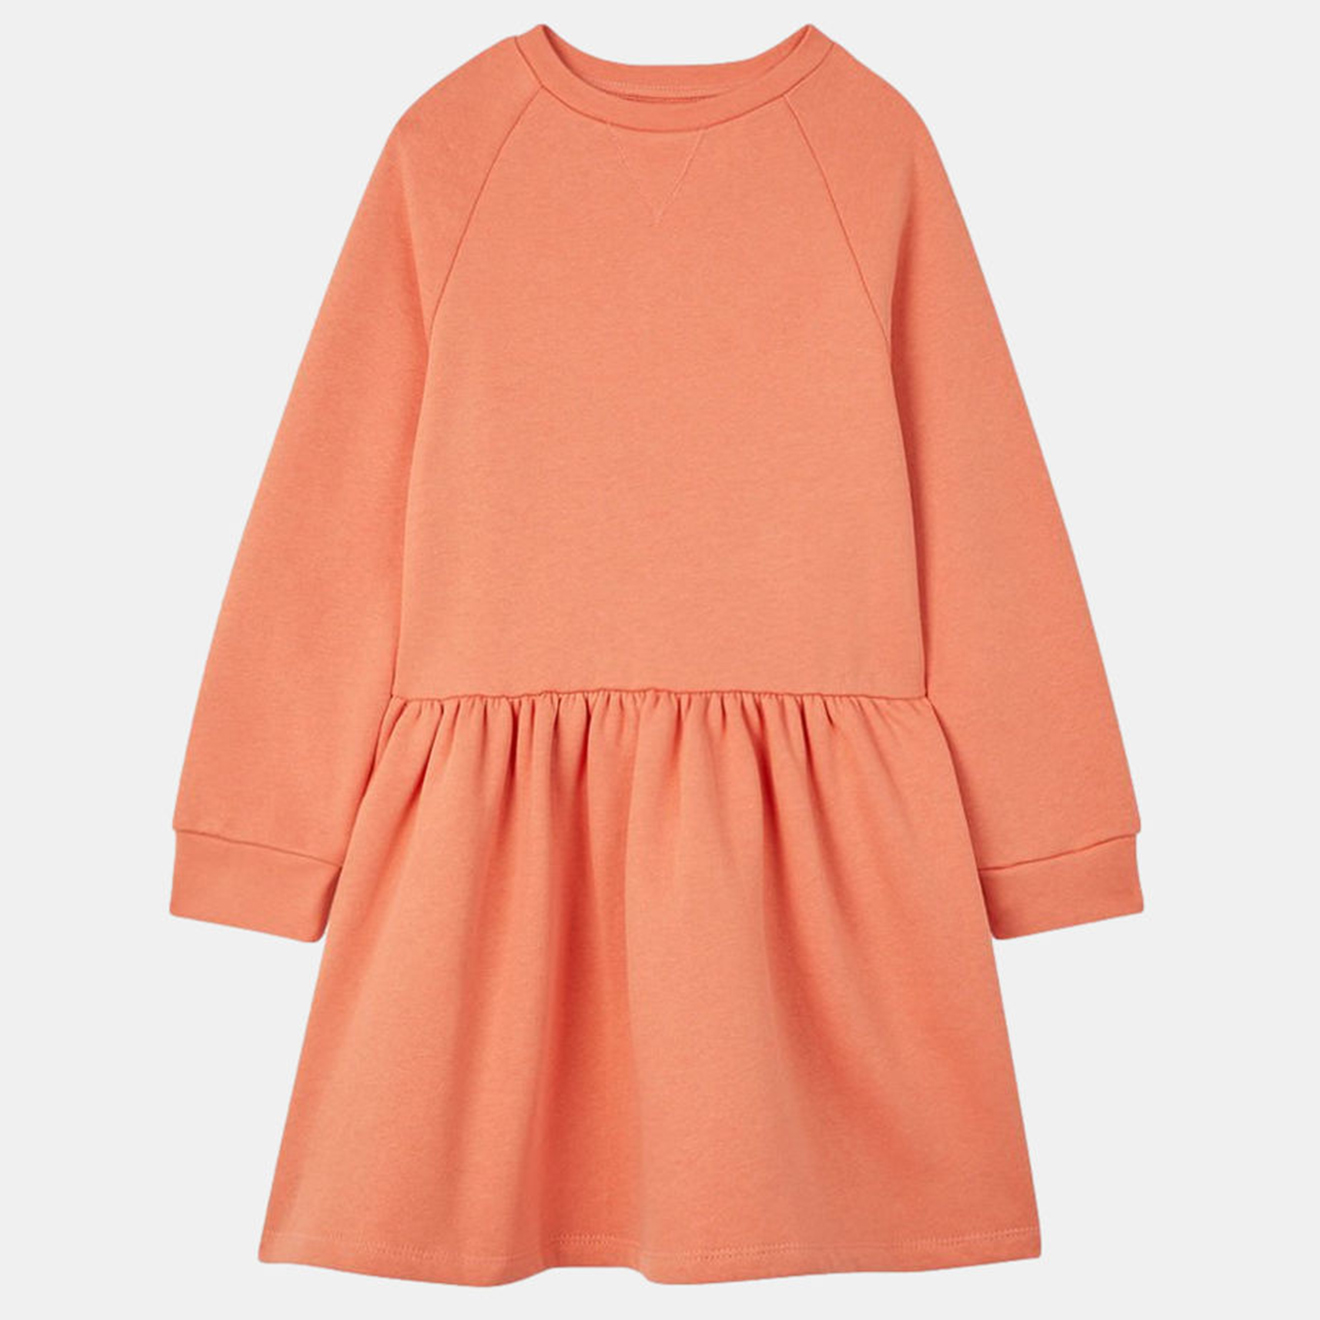 galeries lafayette & kids - robe en coton bio molletonné double orange